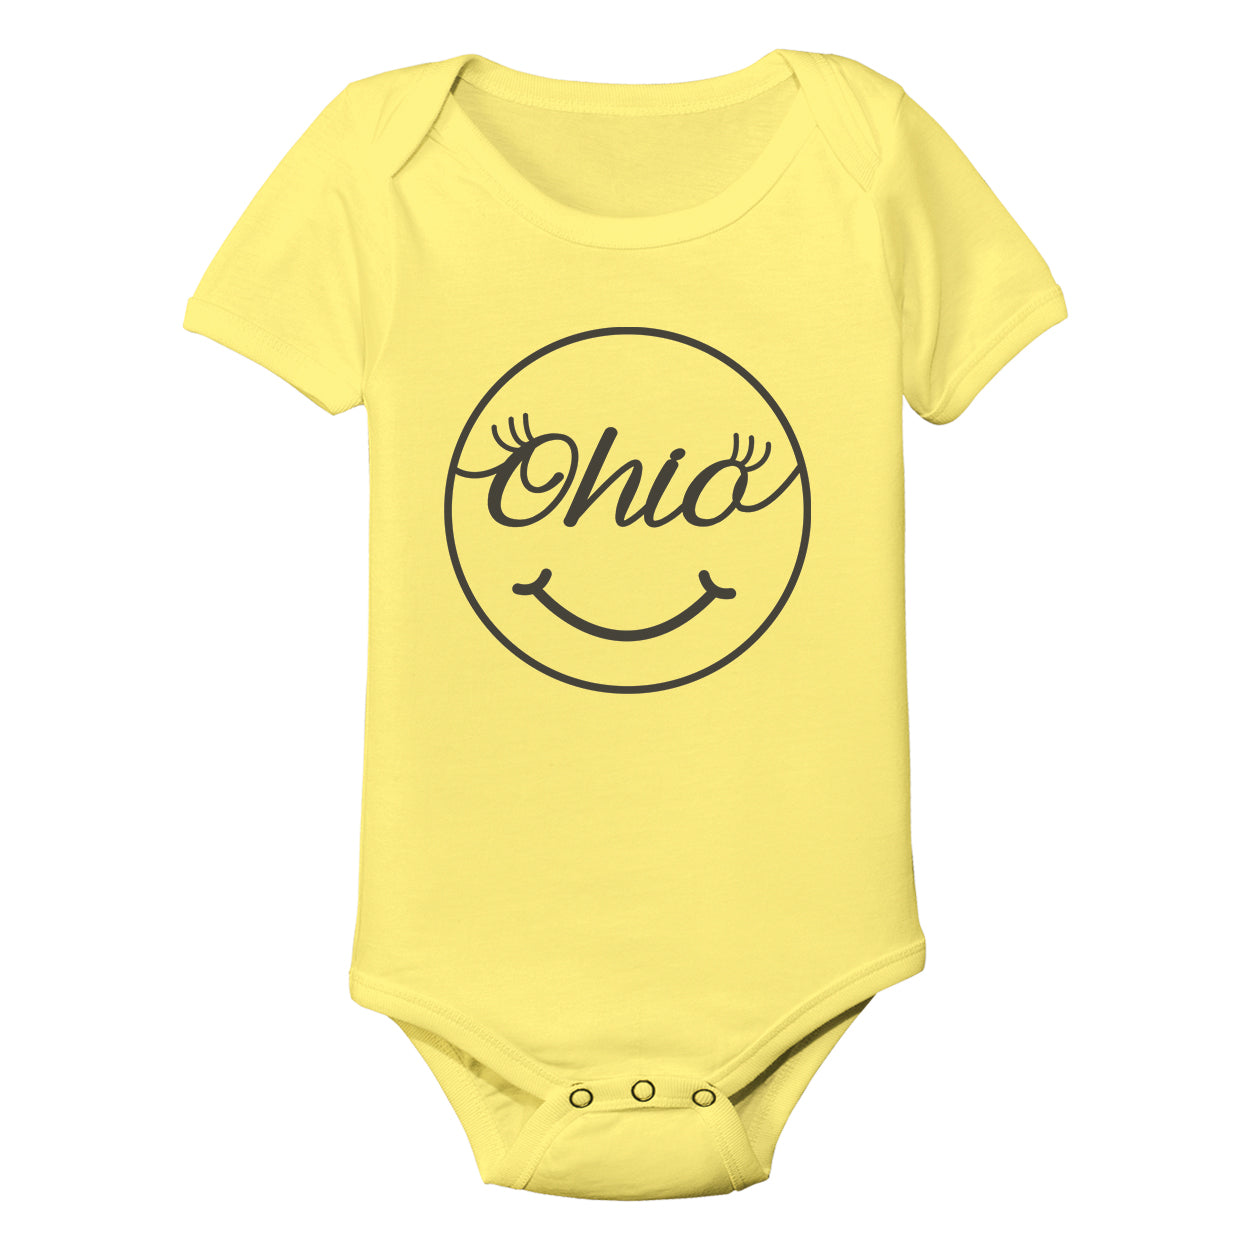 Ohio Smiles Baby One Piece - Clothe Ohio - Soft Ohio Shirts